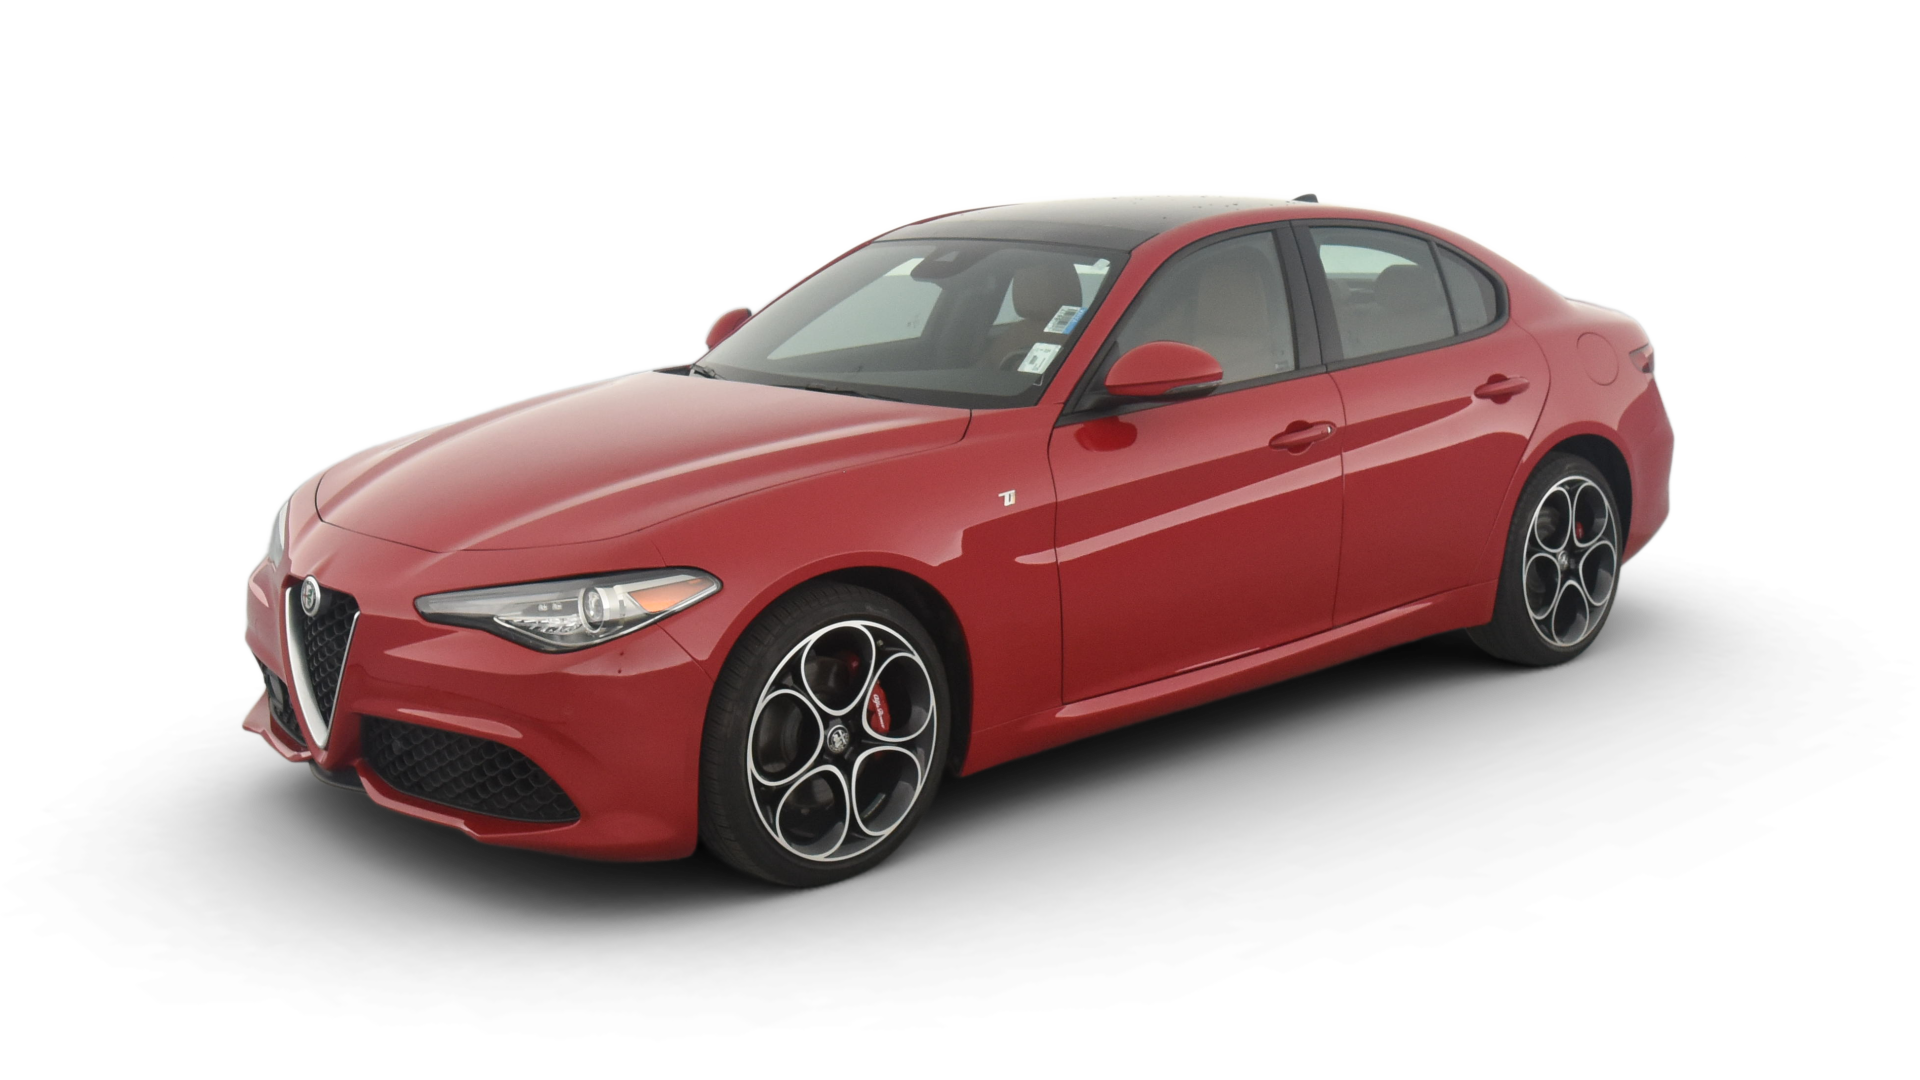 Used Alfa Romeo Giulia for Sale Online